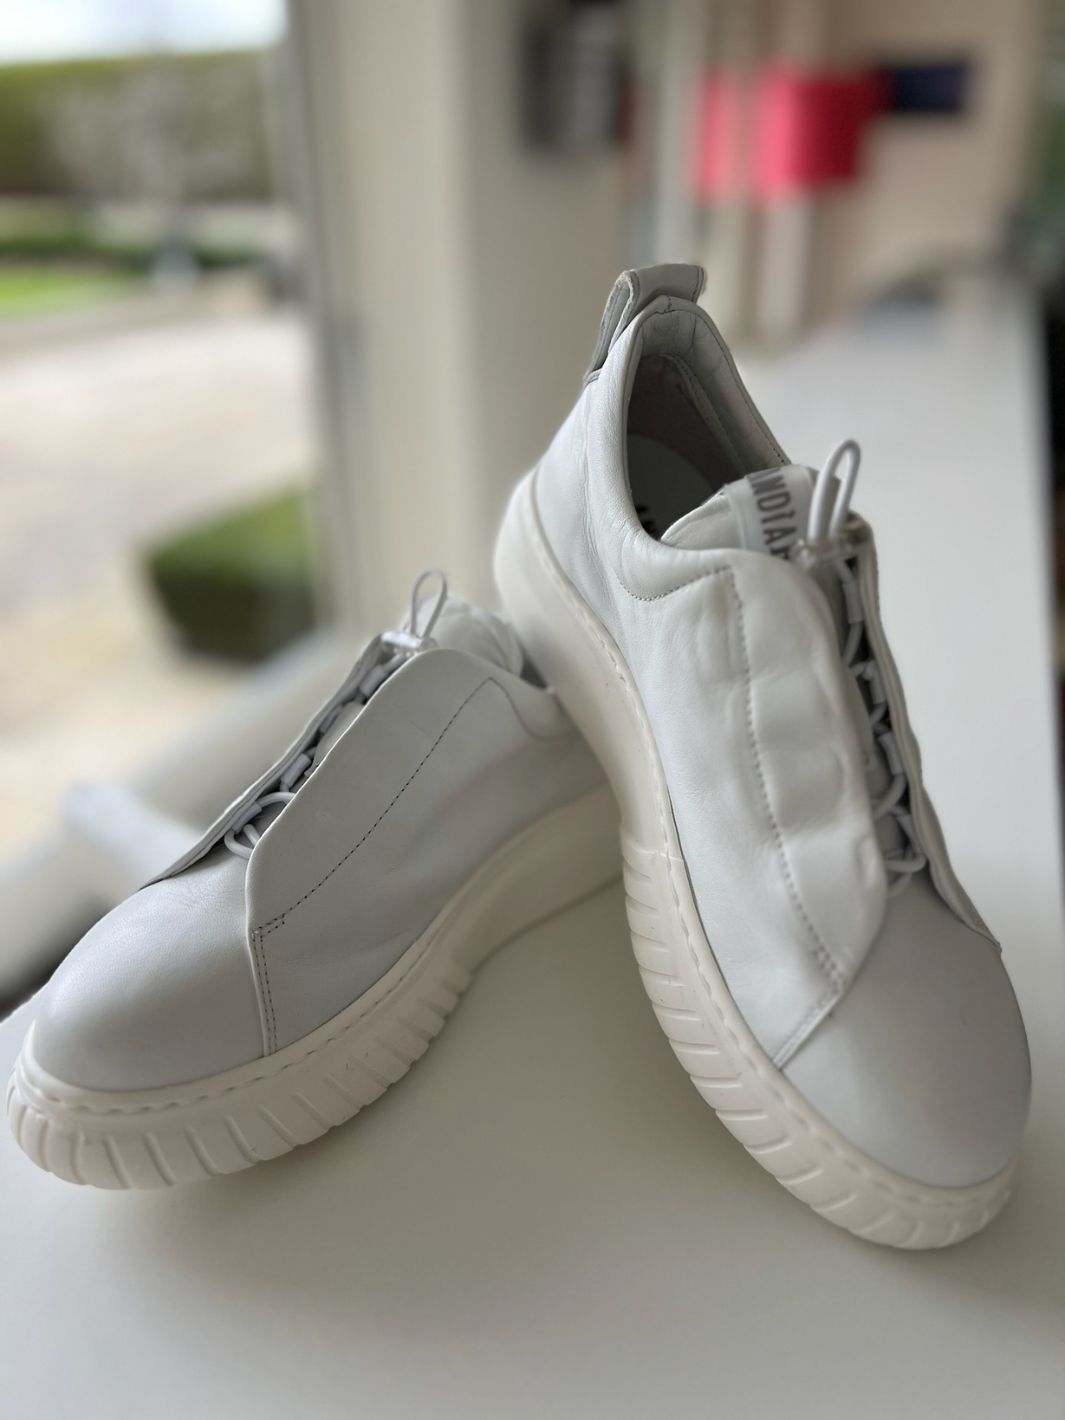 Andia Fora Footwear Andia Fora Libi Dreamer Slip-On Sneakers in White